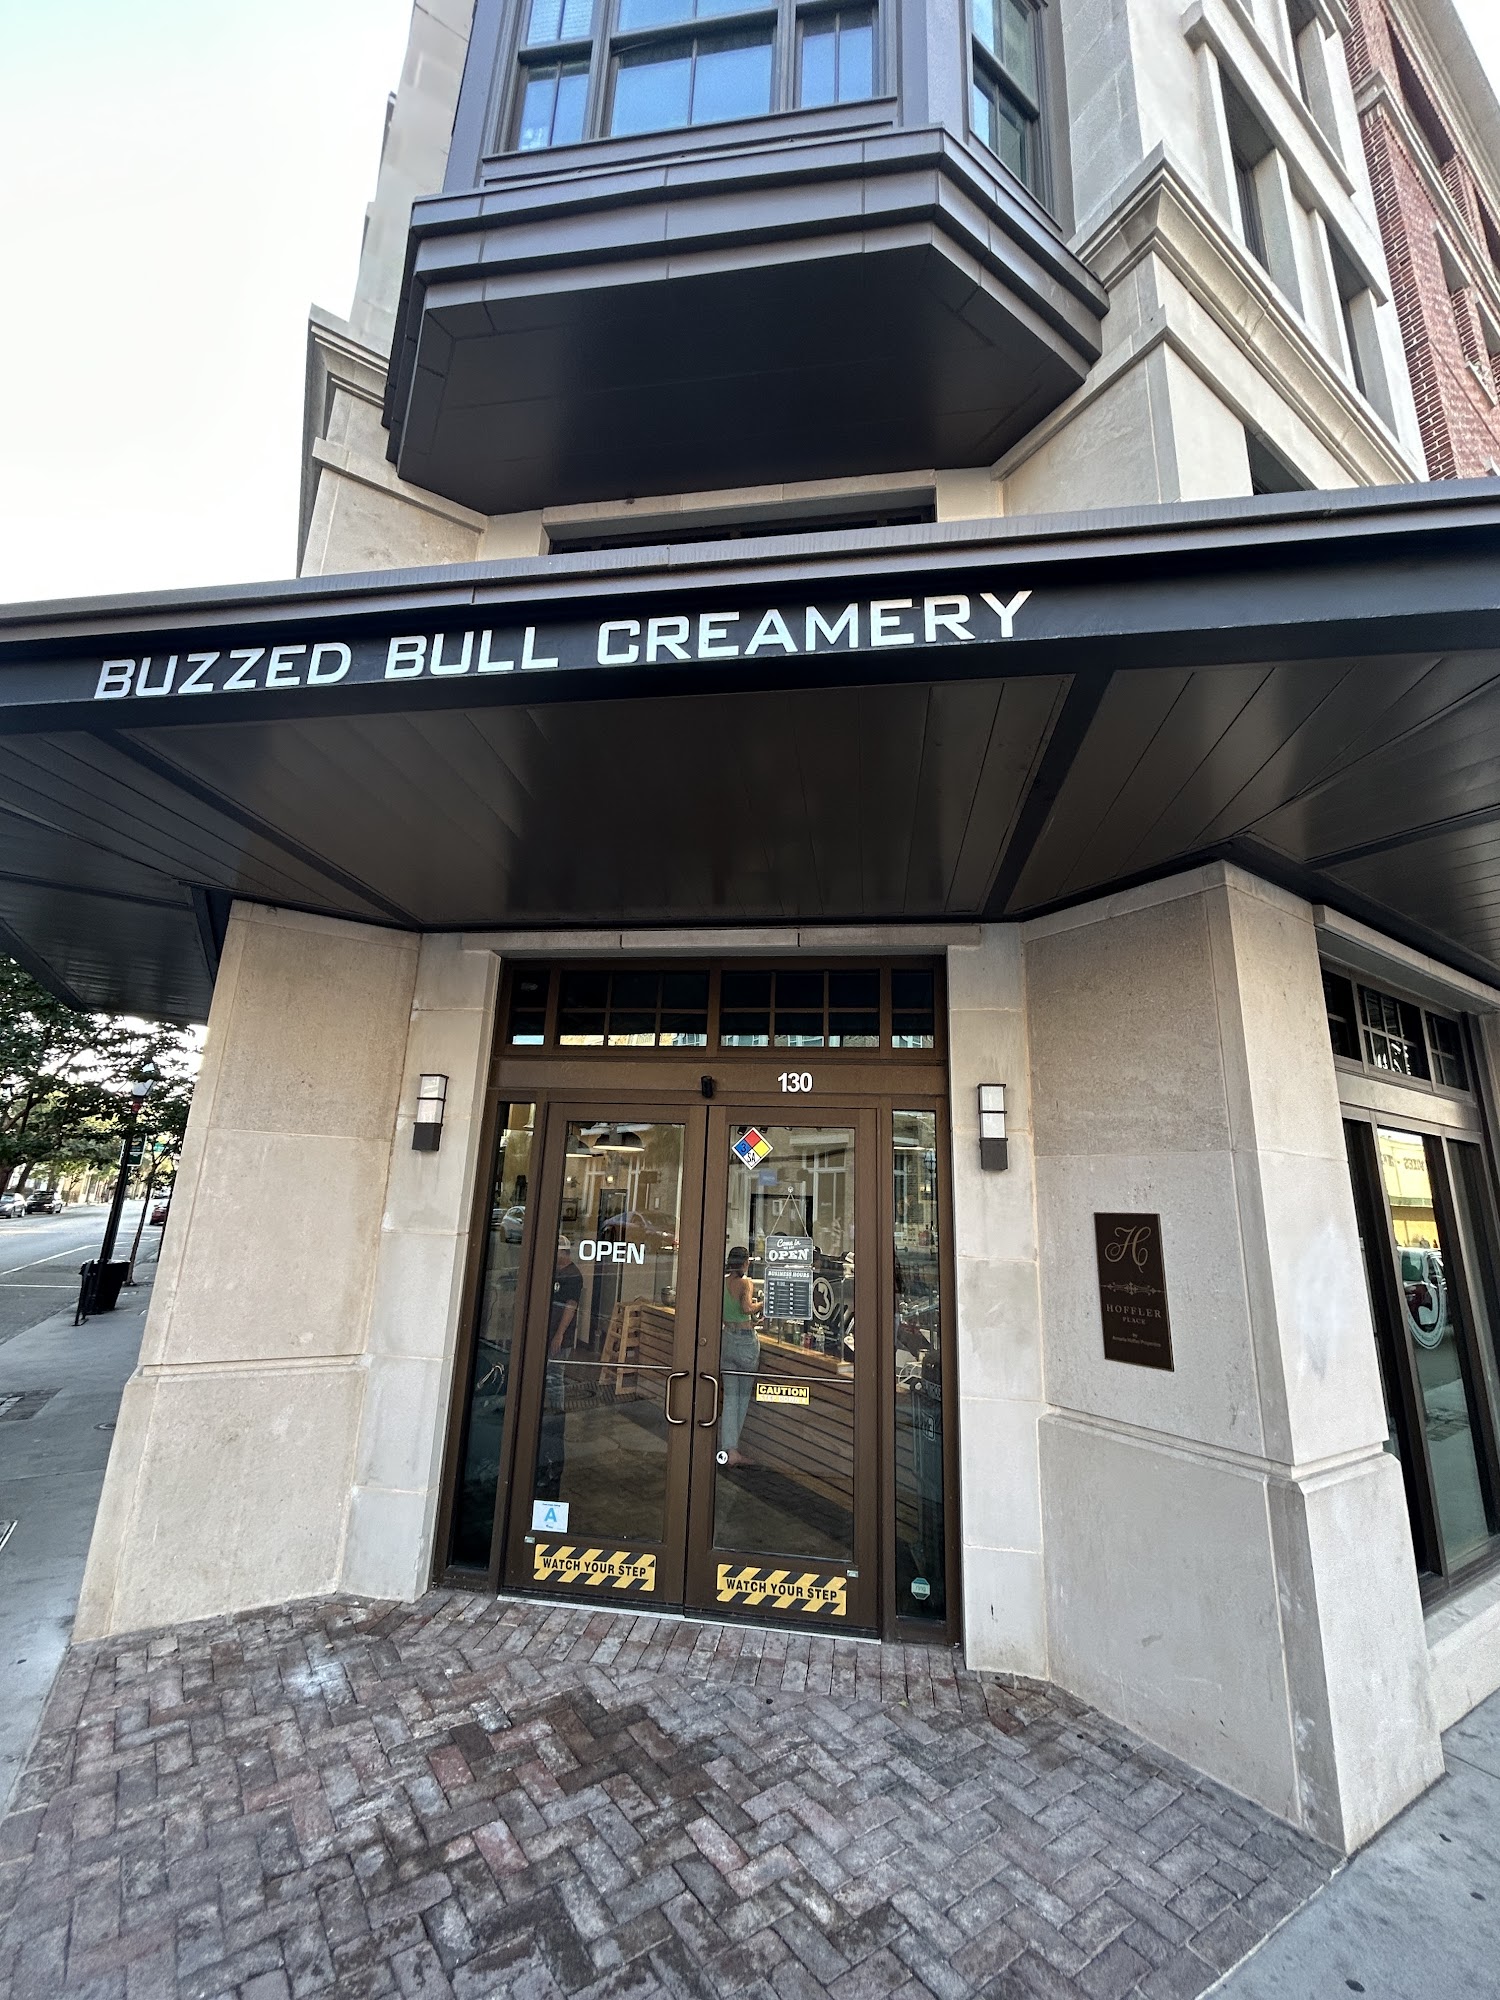 Buzzed Bull Creamery - Charleston, SC